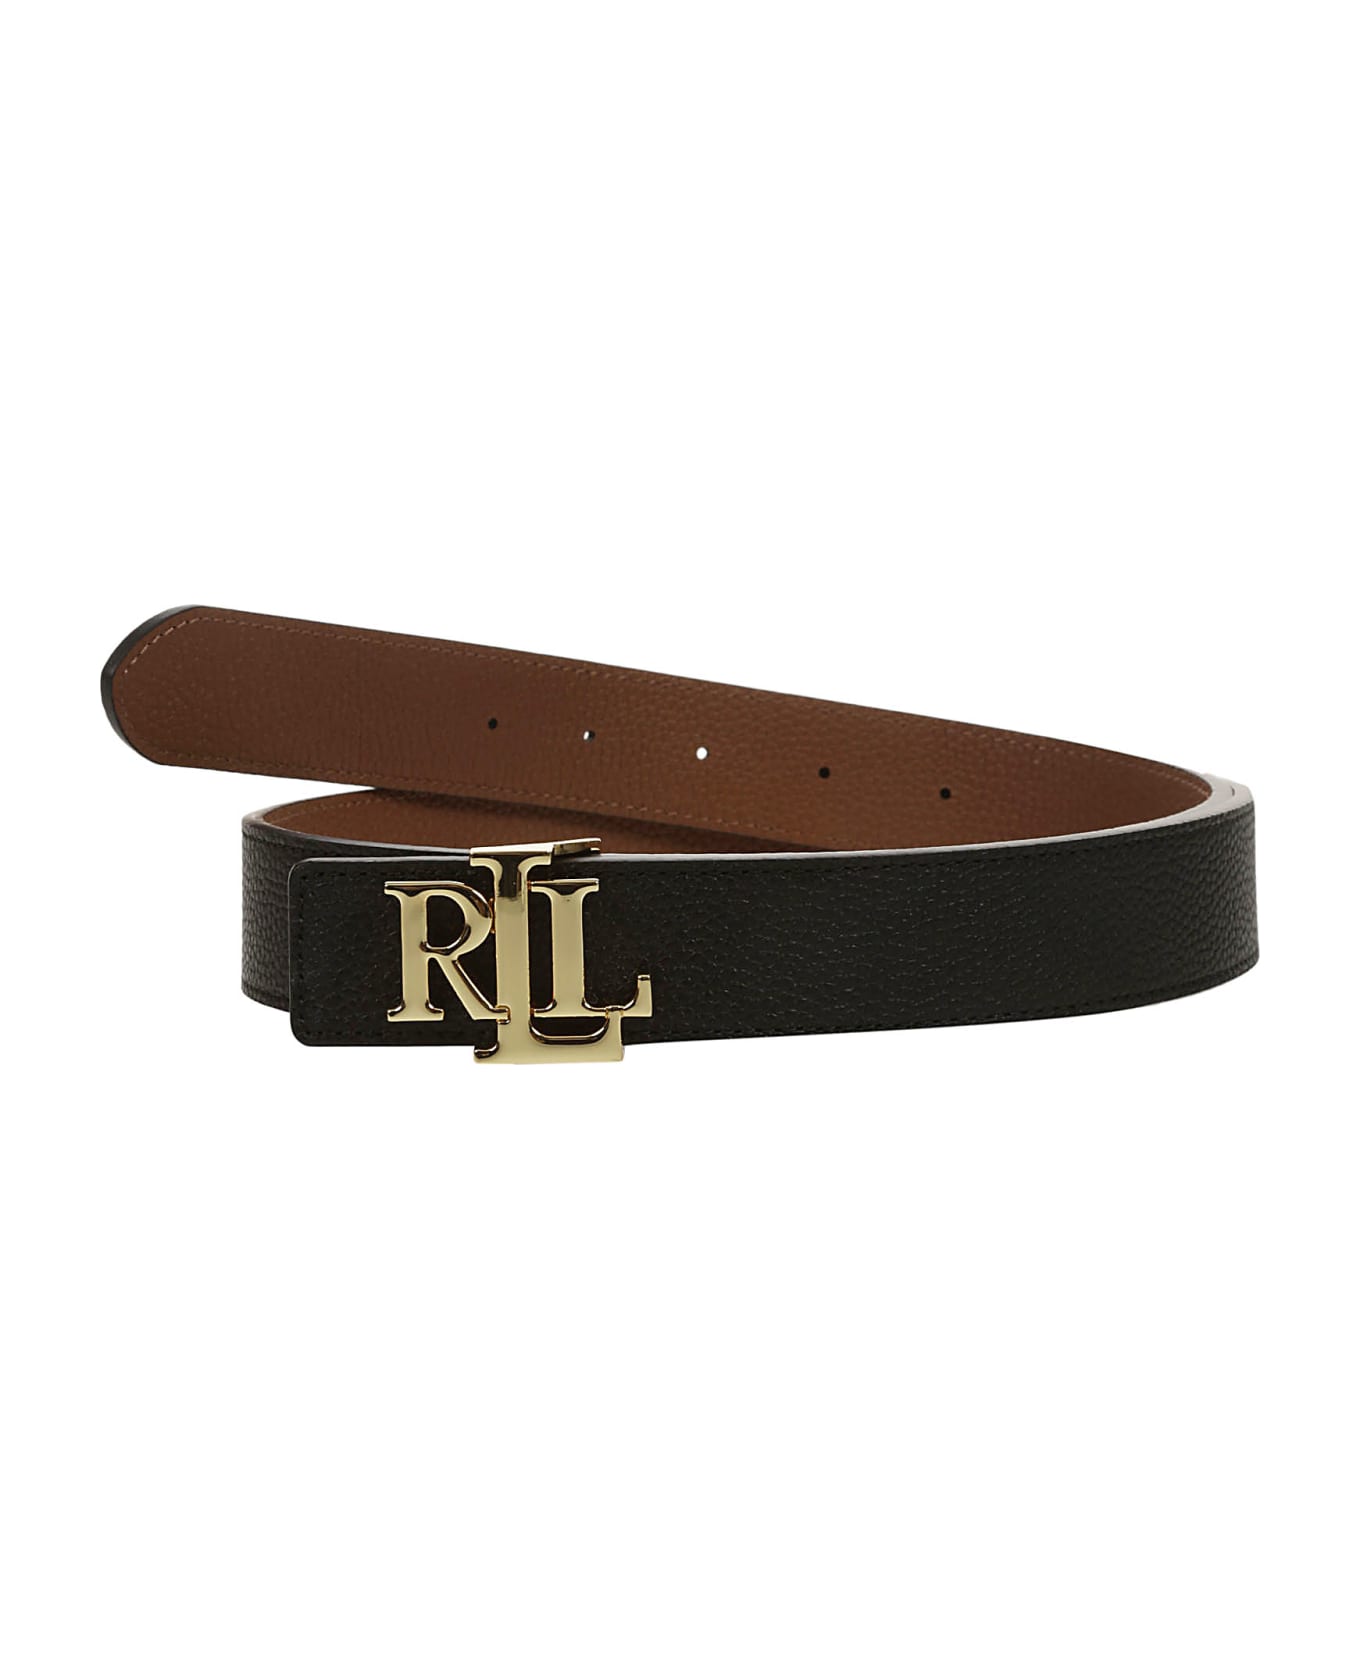 Ralph Lauren Rev Lrl 30 Belt Medium - Multicolor